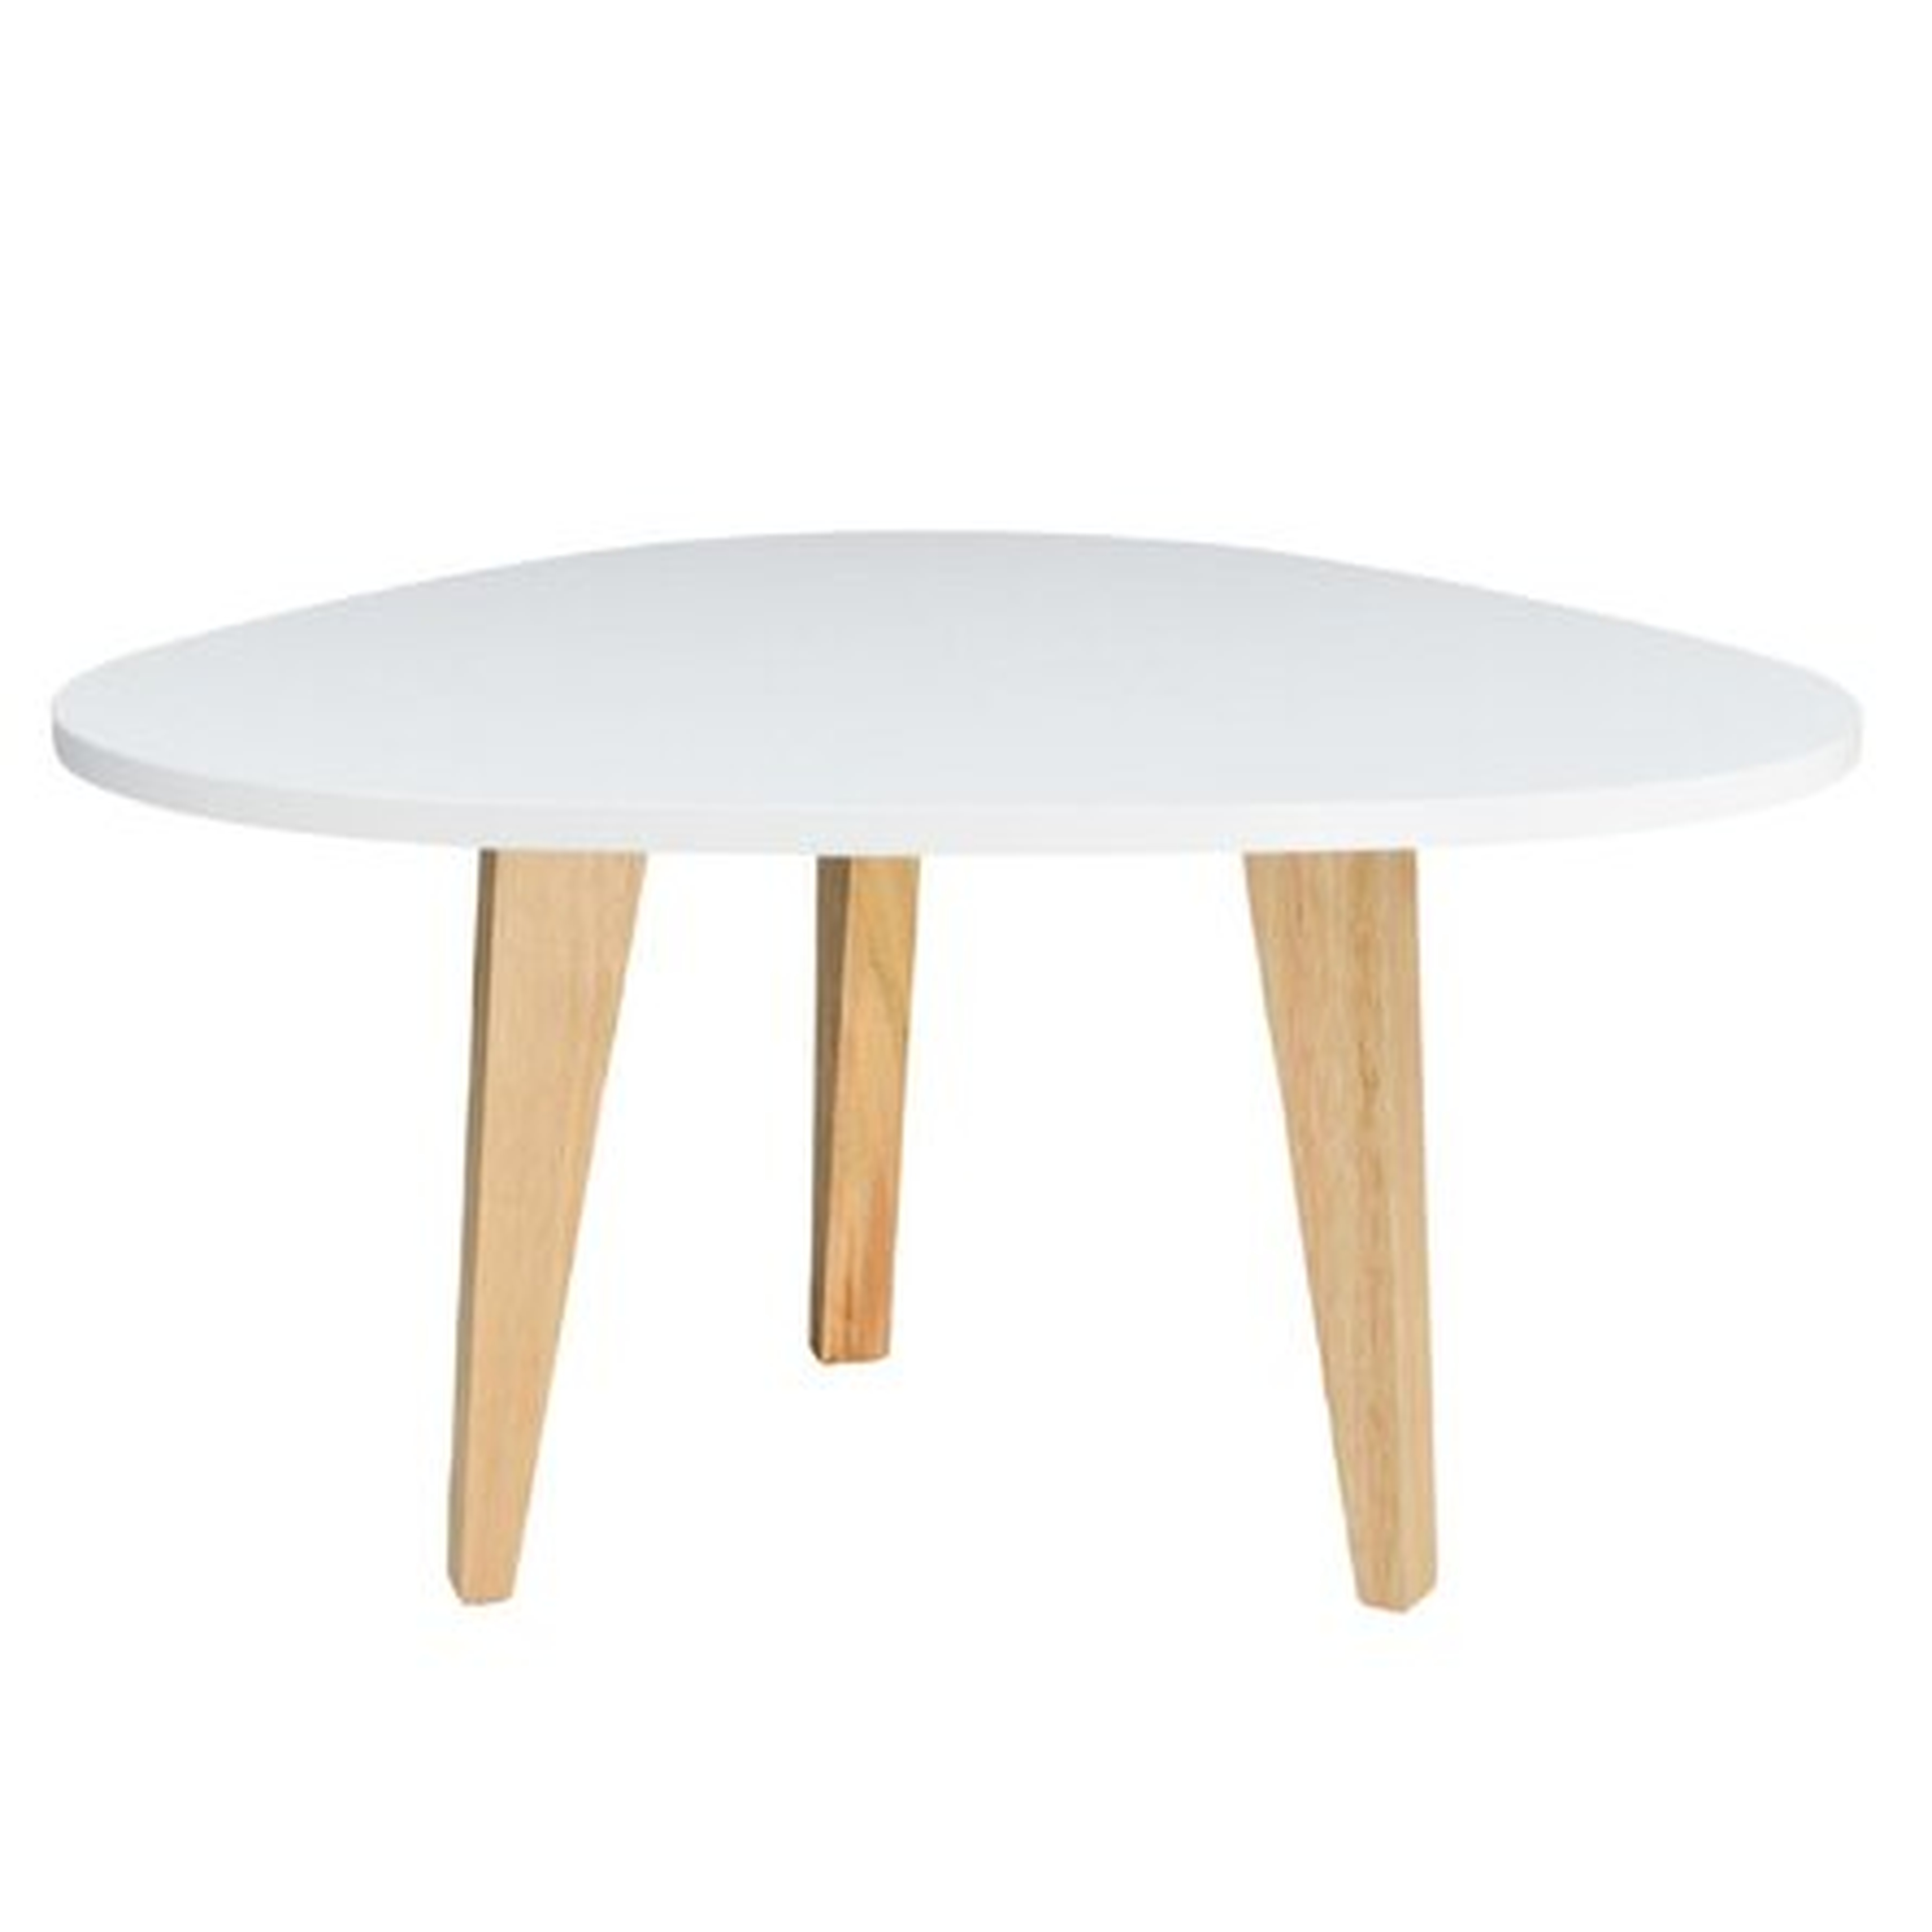 3 Legged Oval Modern Coffee Table, White - Wayfair